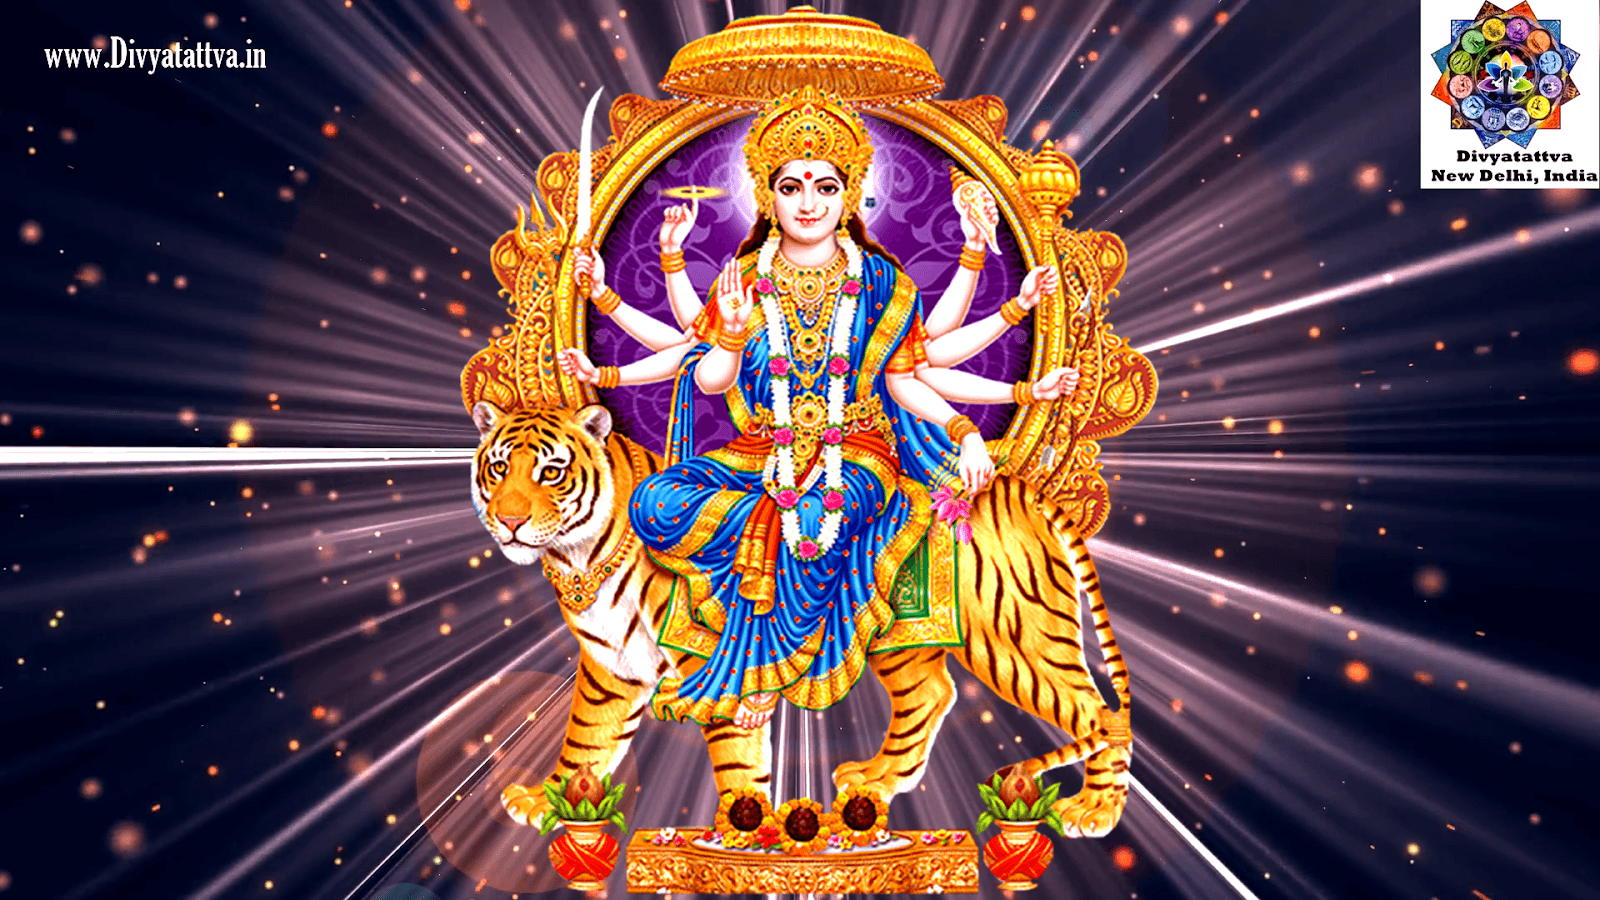 Maa Durga HD Wallpaper, Goddess Durga Image, Devi